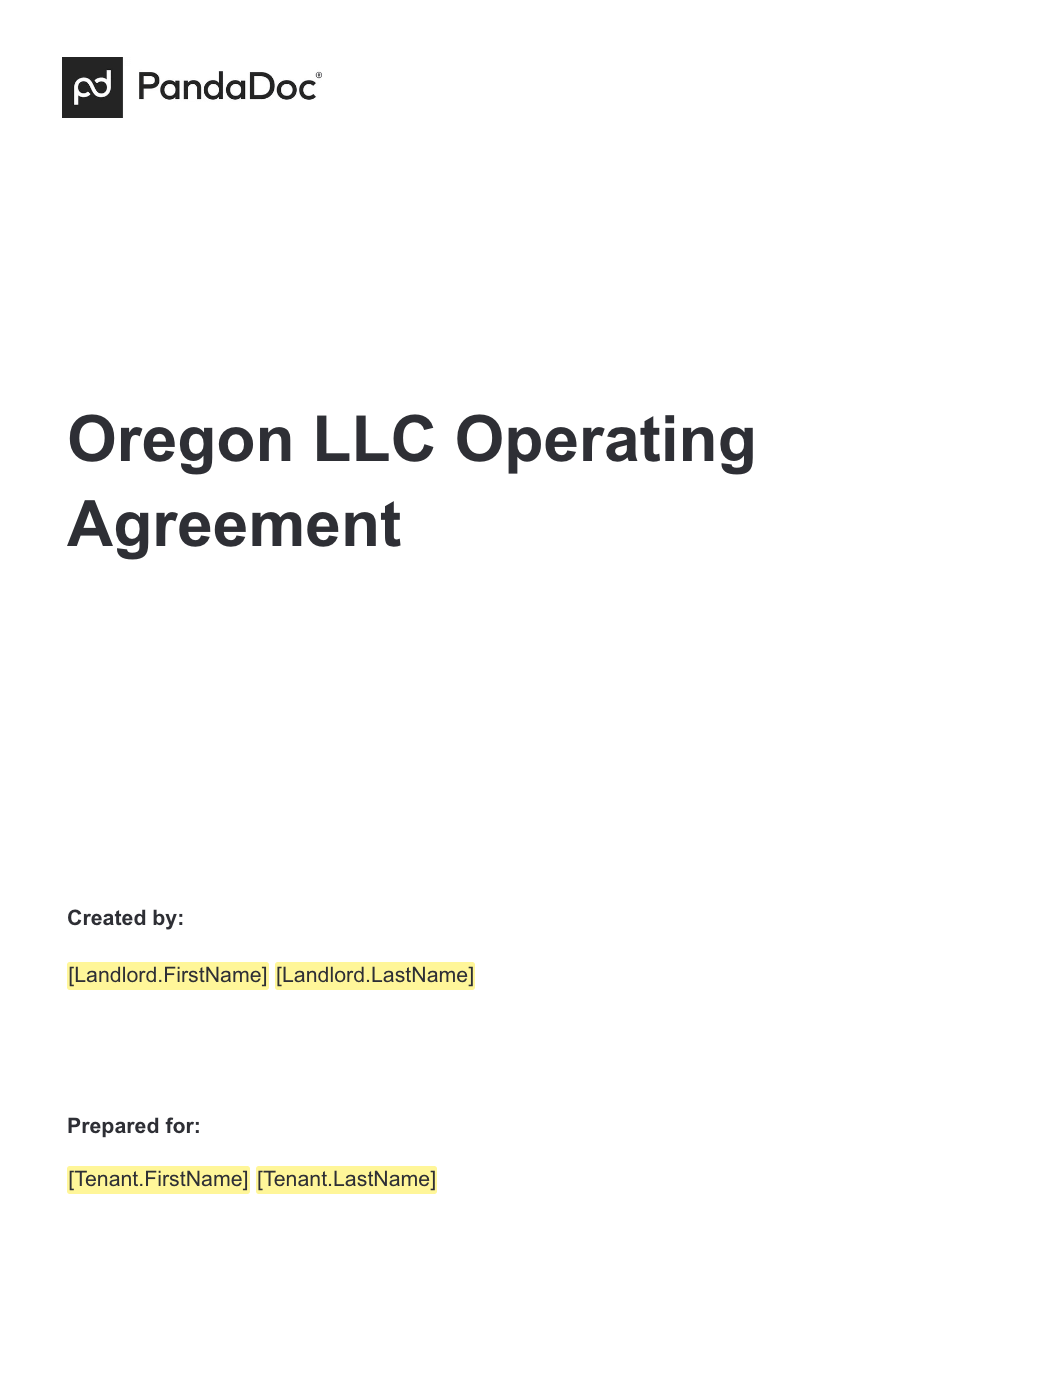 Oregon LLC Operating Agreement 